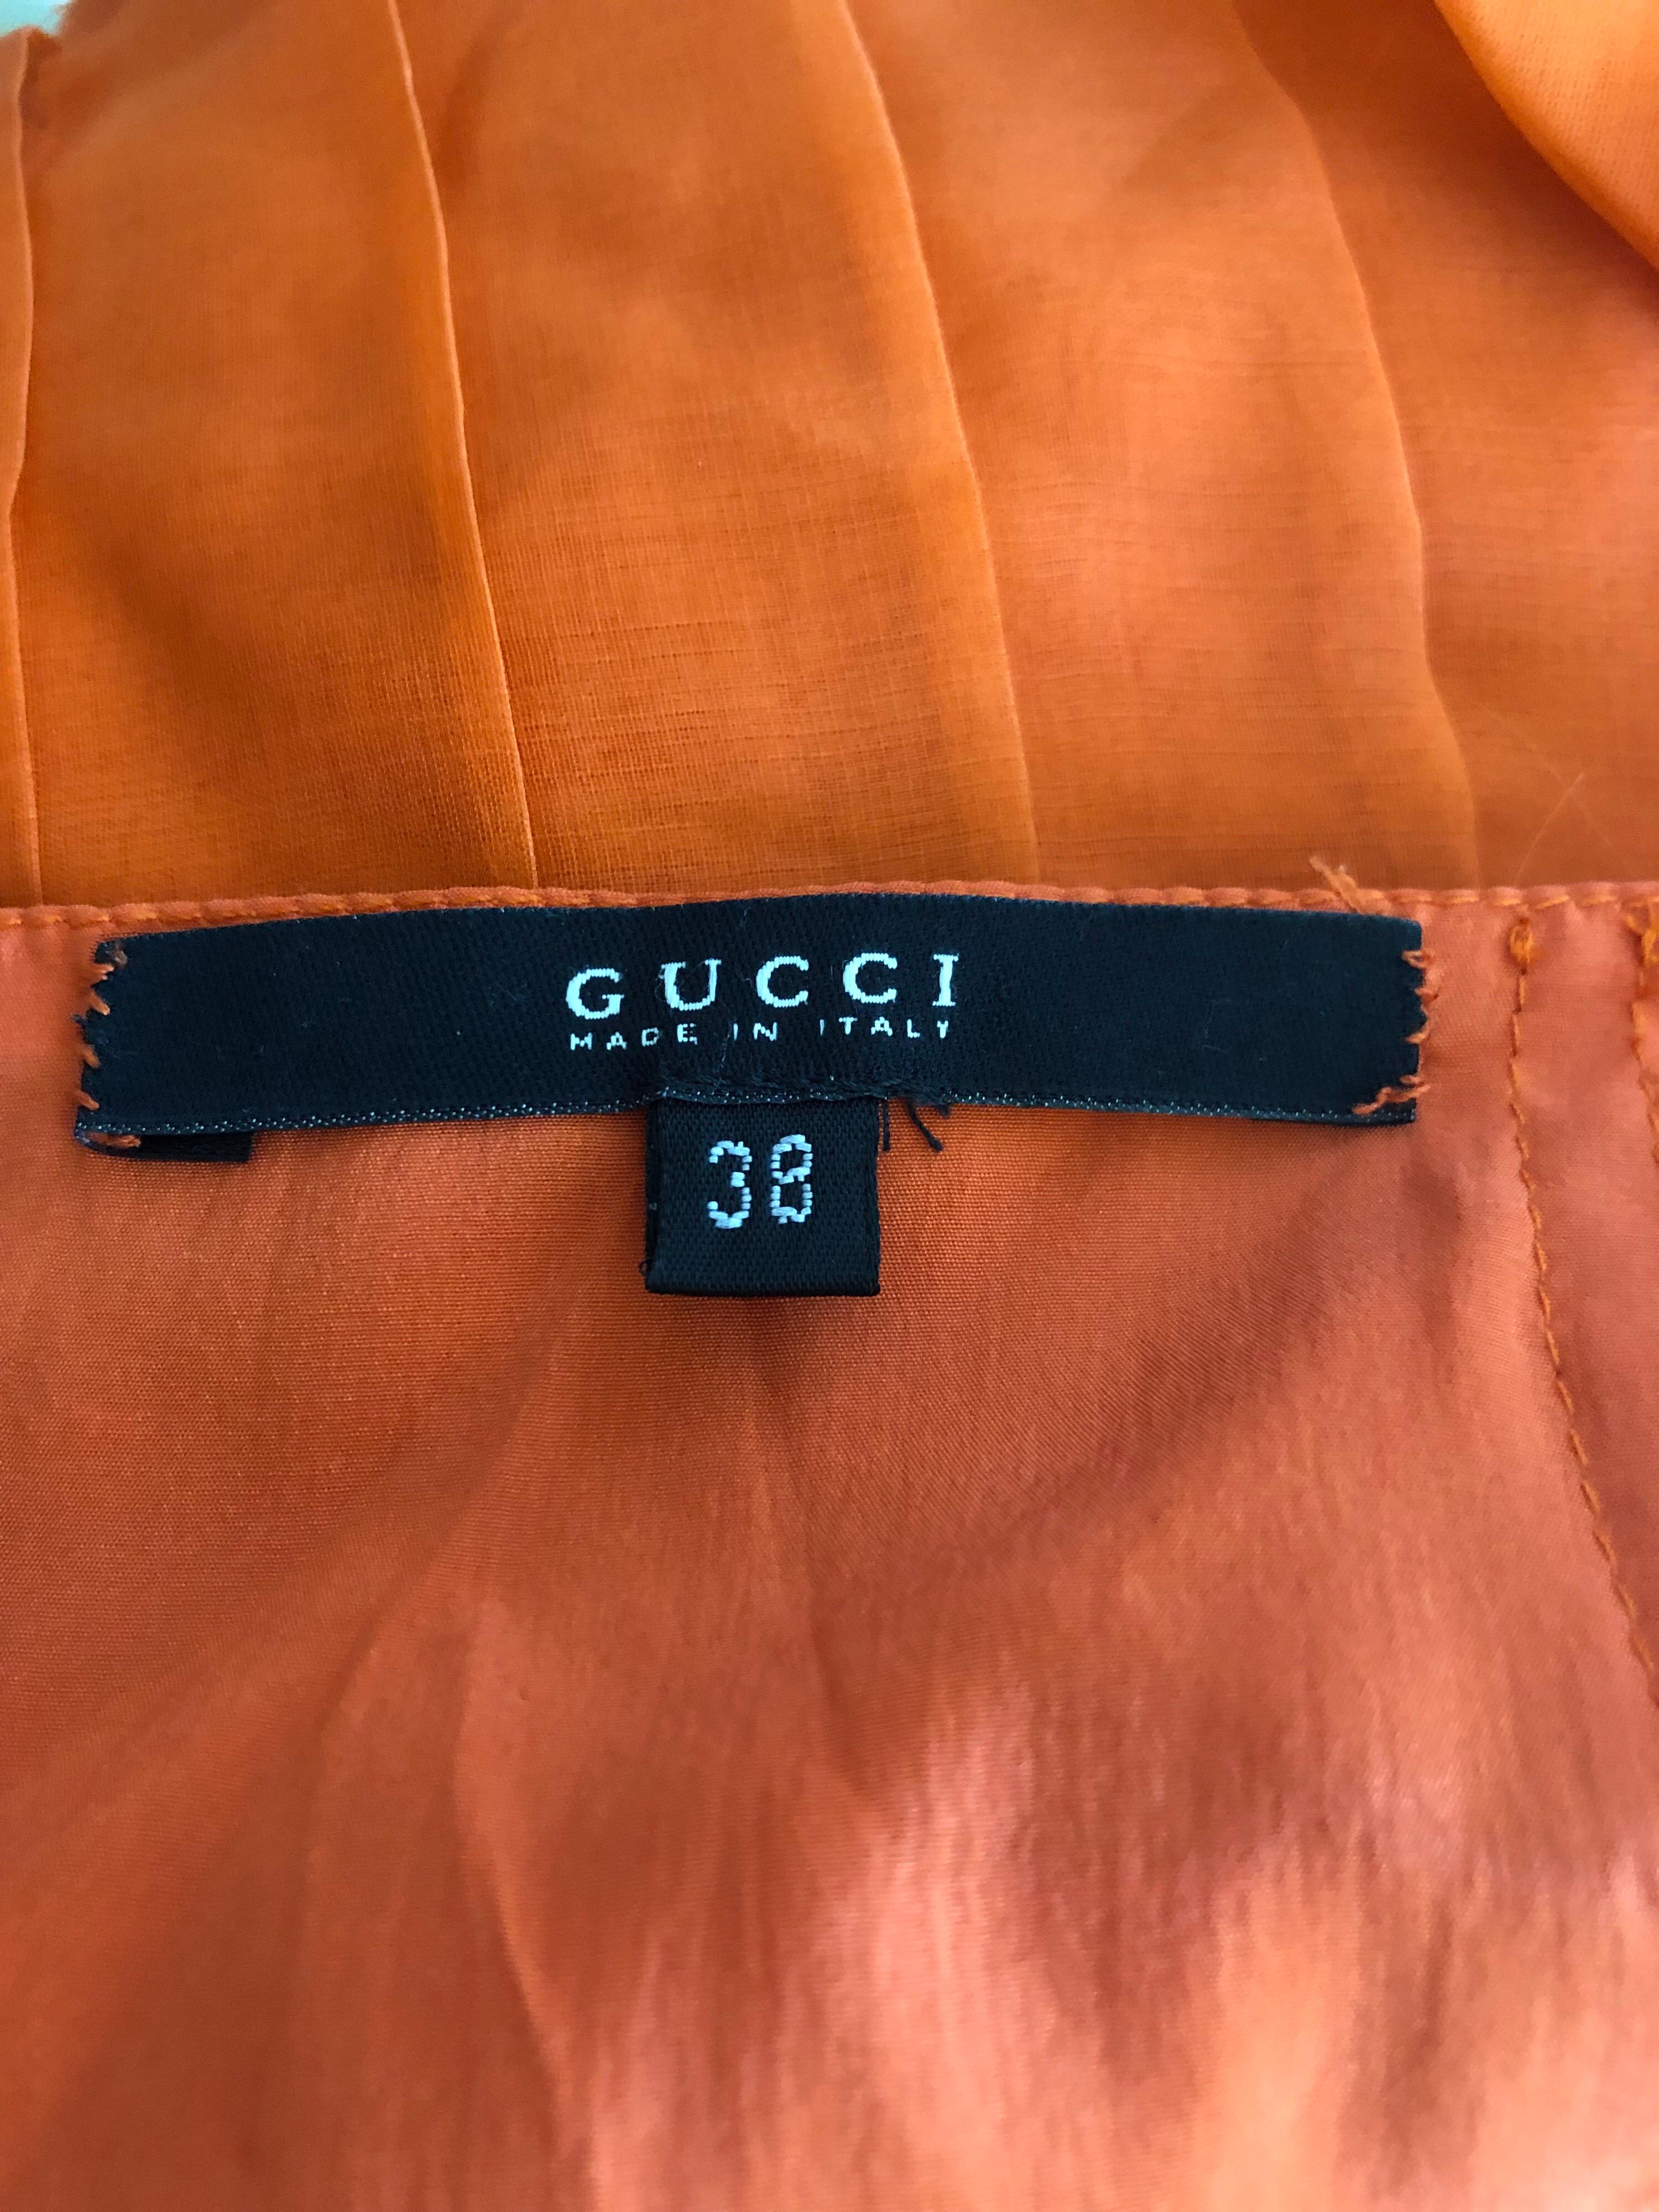 Women's Gucci by Tom Ford S/S 2004 Runway Bustier Silk Open Back Tangerine Dress